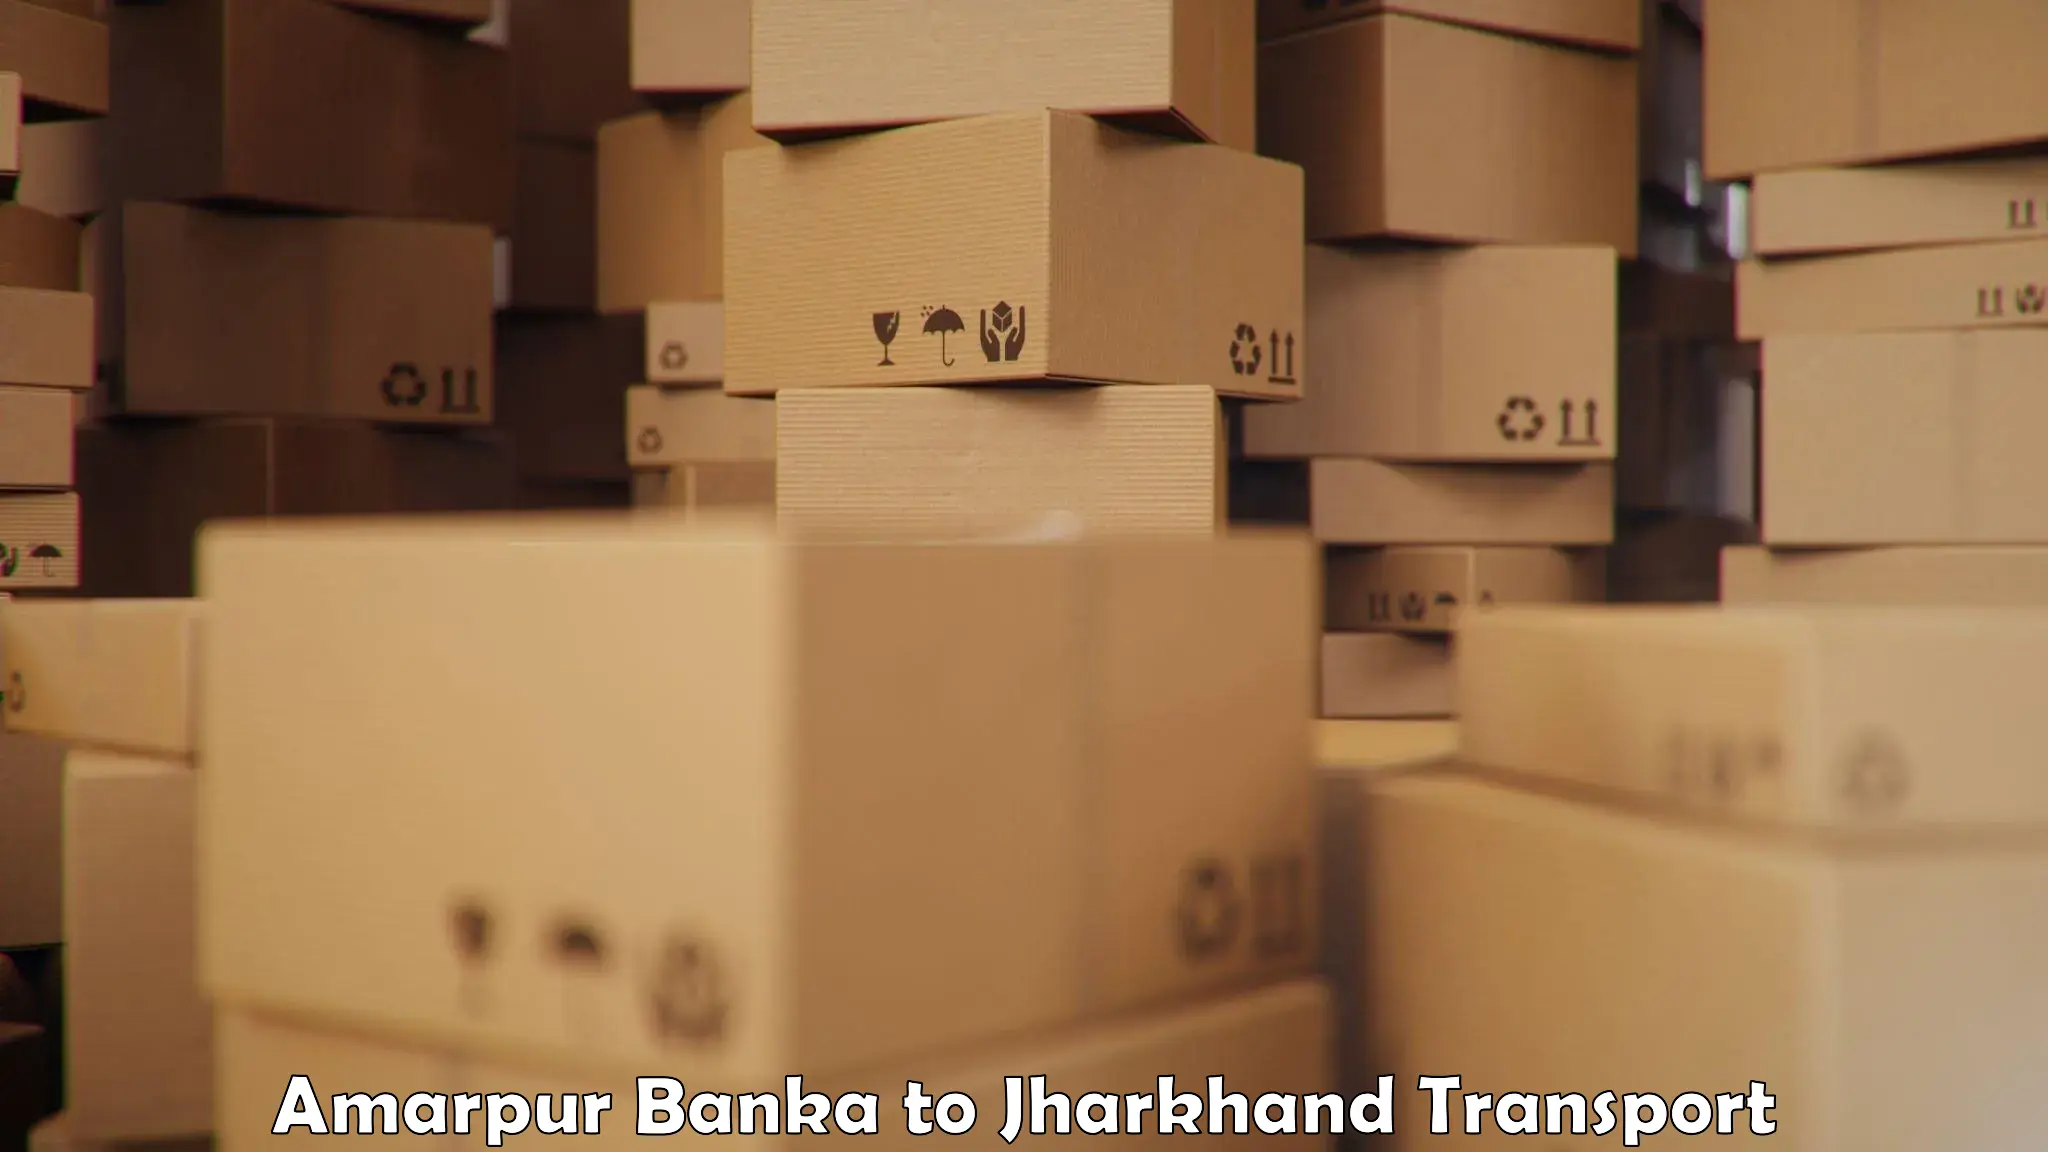 Truck transport companies in India Amarpur Banka to Gobindpur